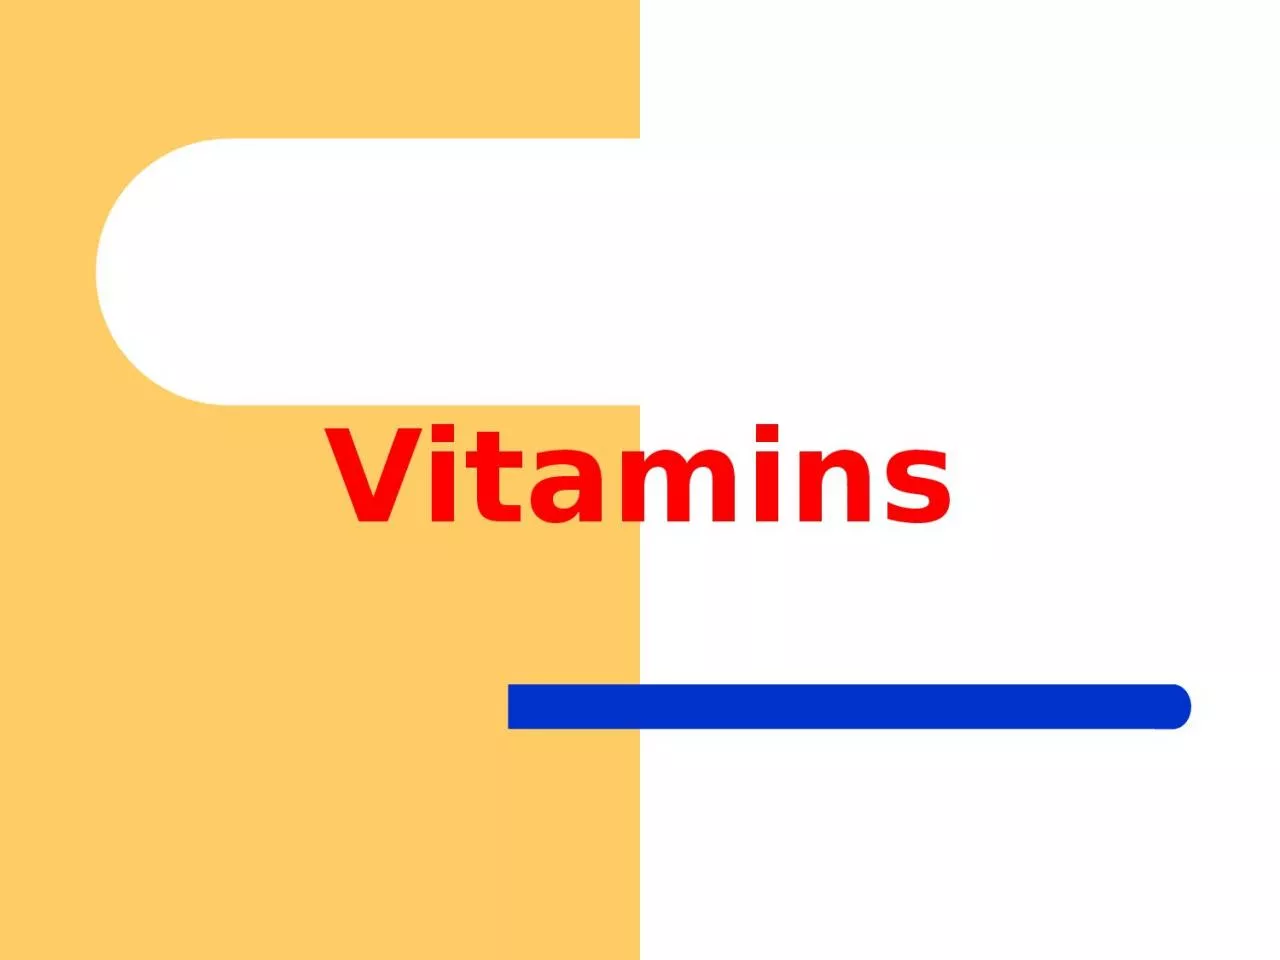 Vitamins 2 The Nature of Vitamins